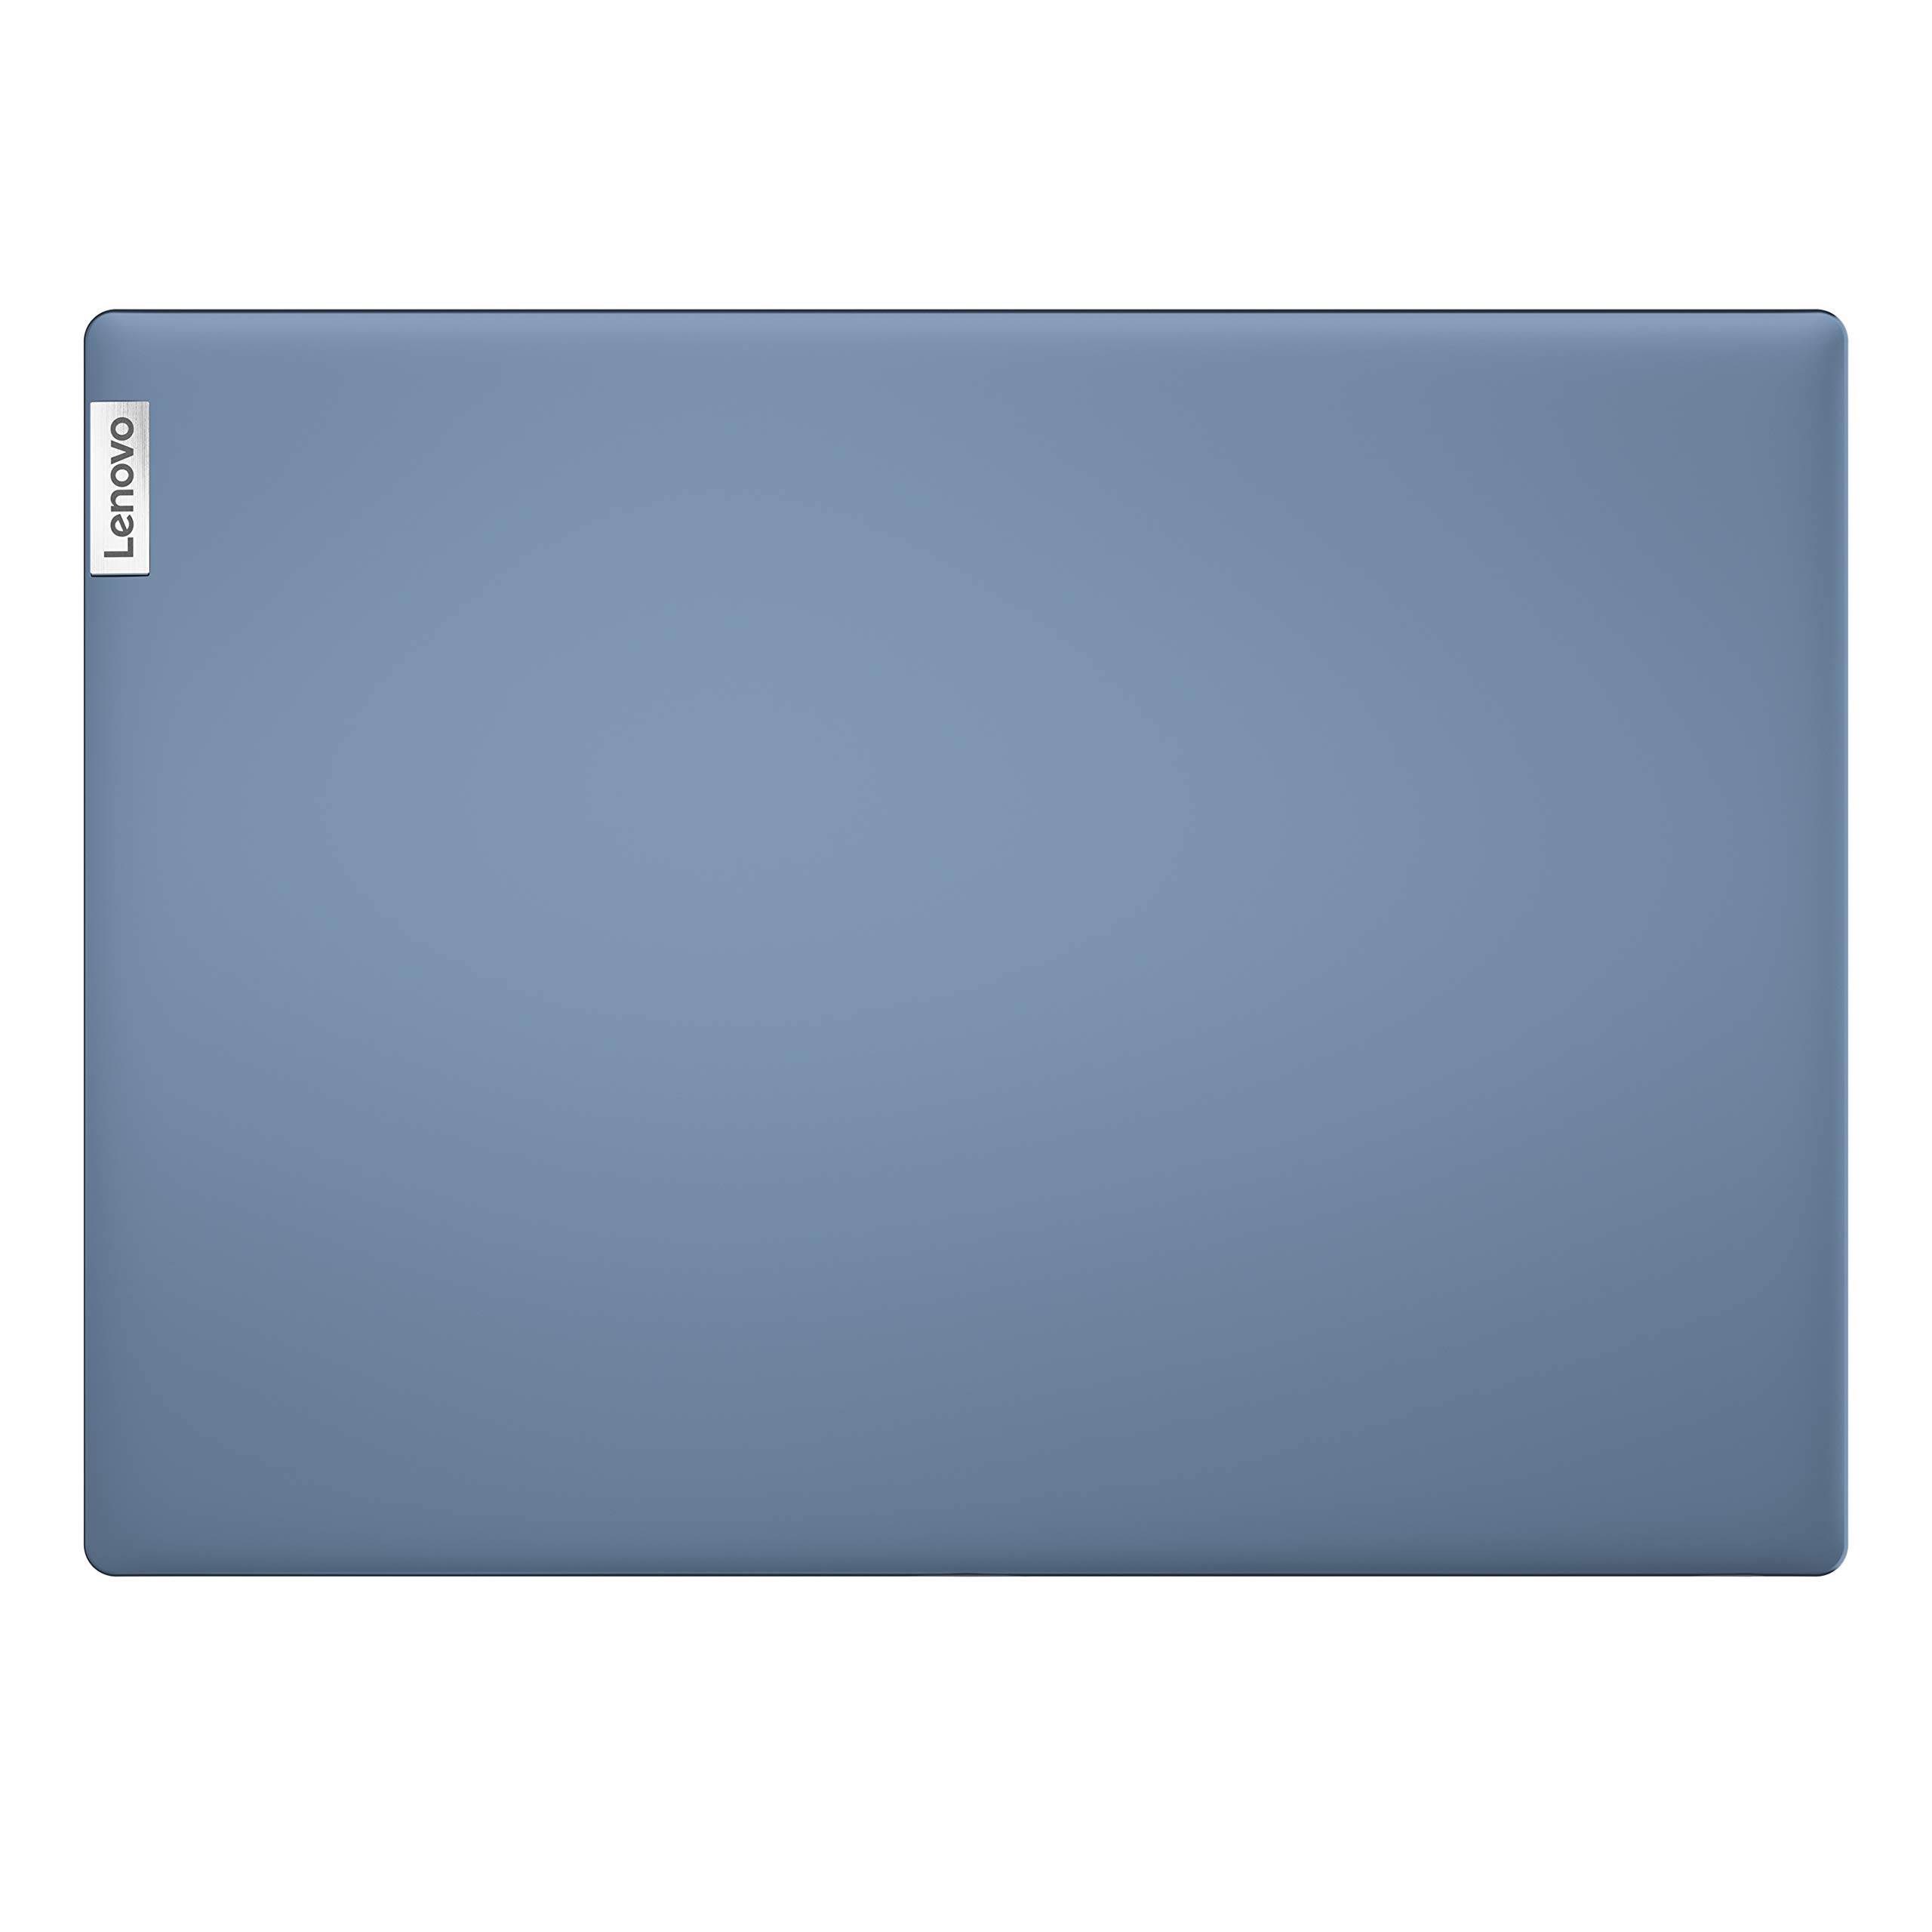 Lenovo IdeaPad 1 Laptop, 14.0